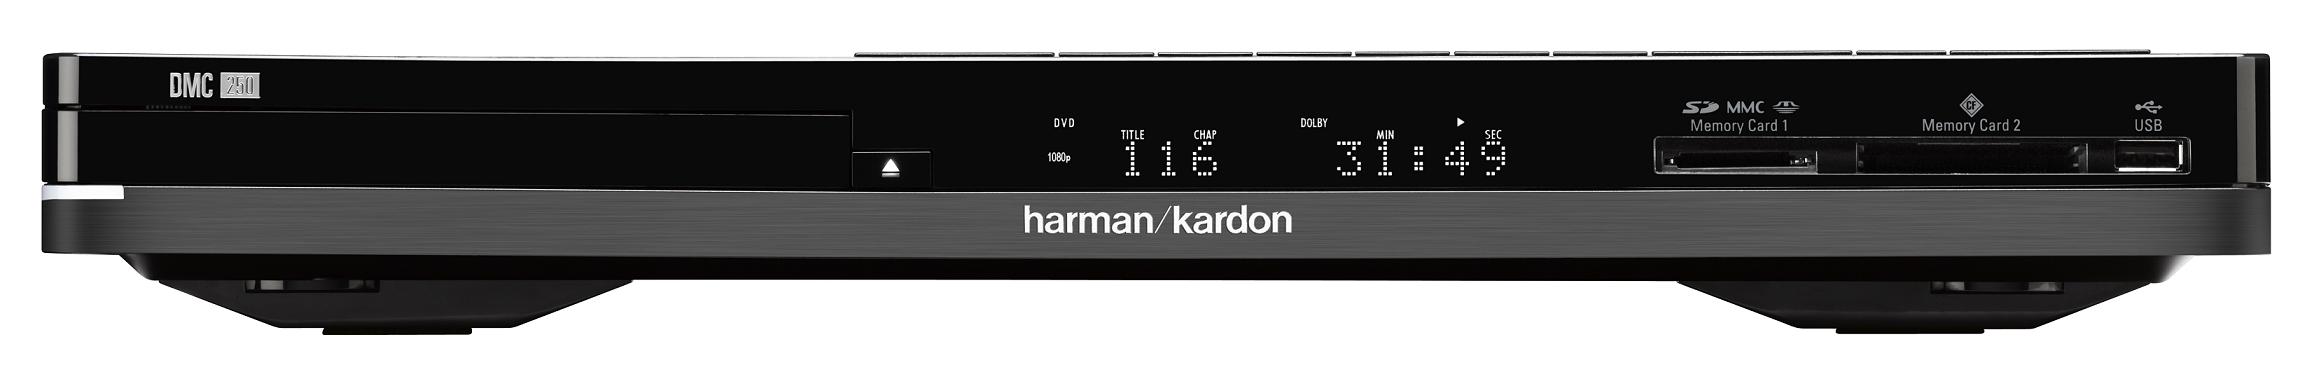 Odtwarzacz DVD Harman Kardon DMC 250